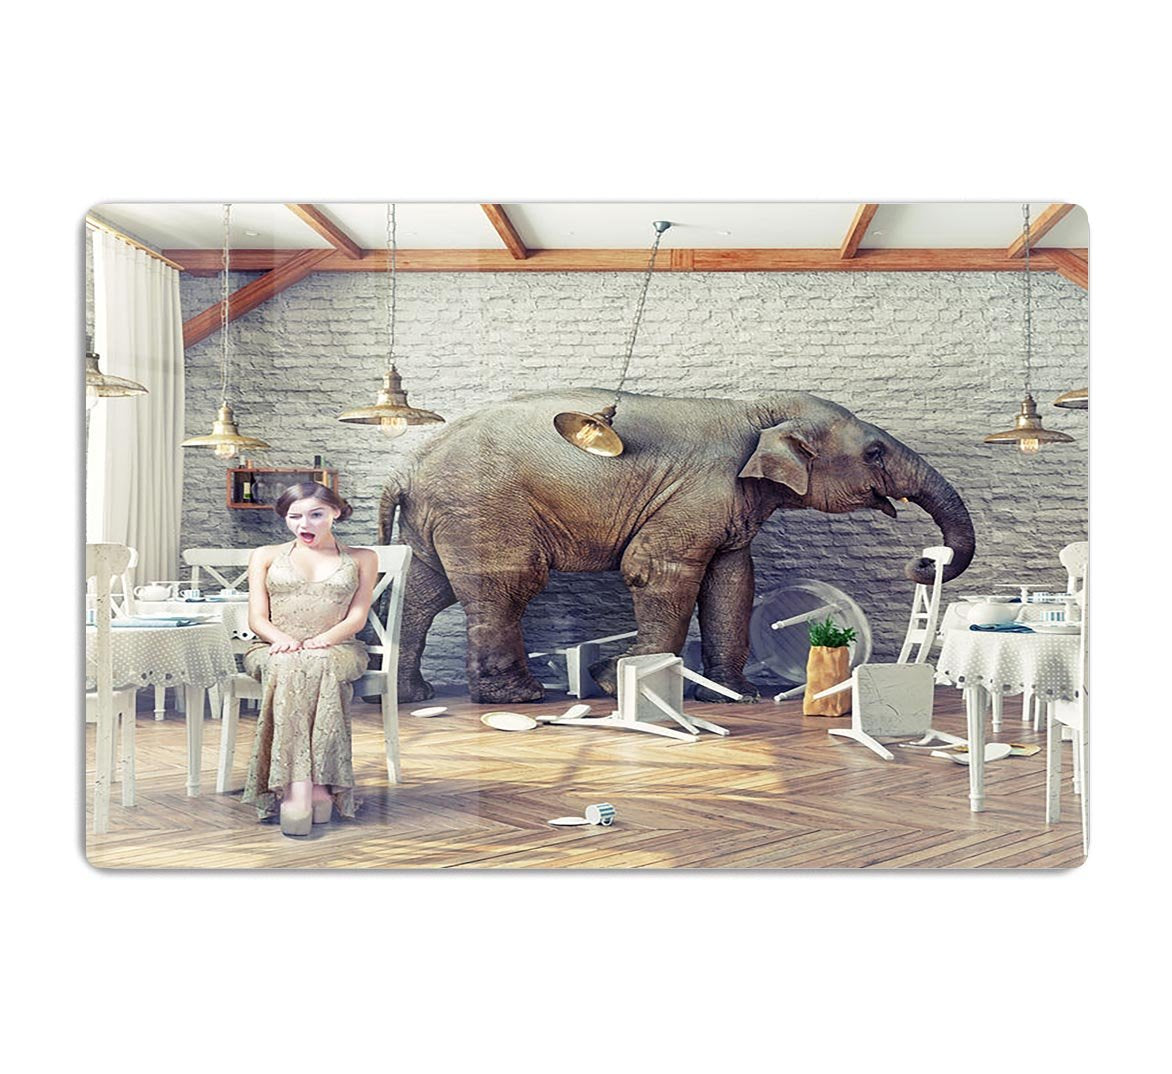 The elephant calm in a restaurant interior. photo combination concept HD Metal Print - Canvas Art Rocks - 1